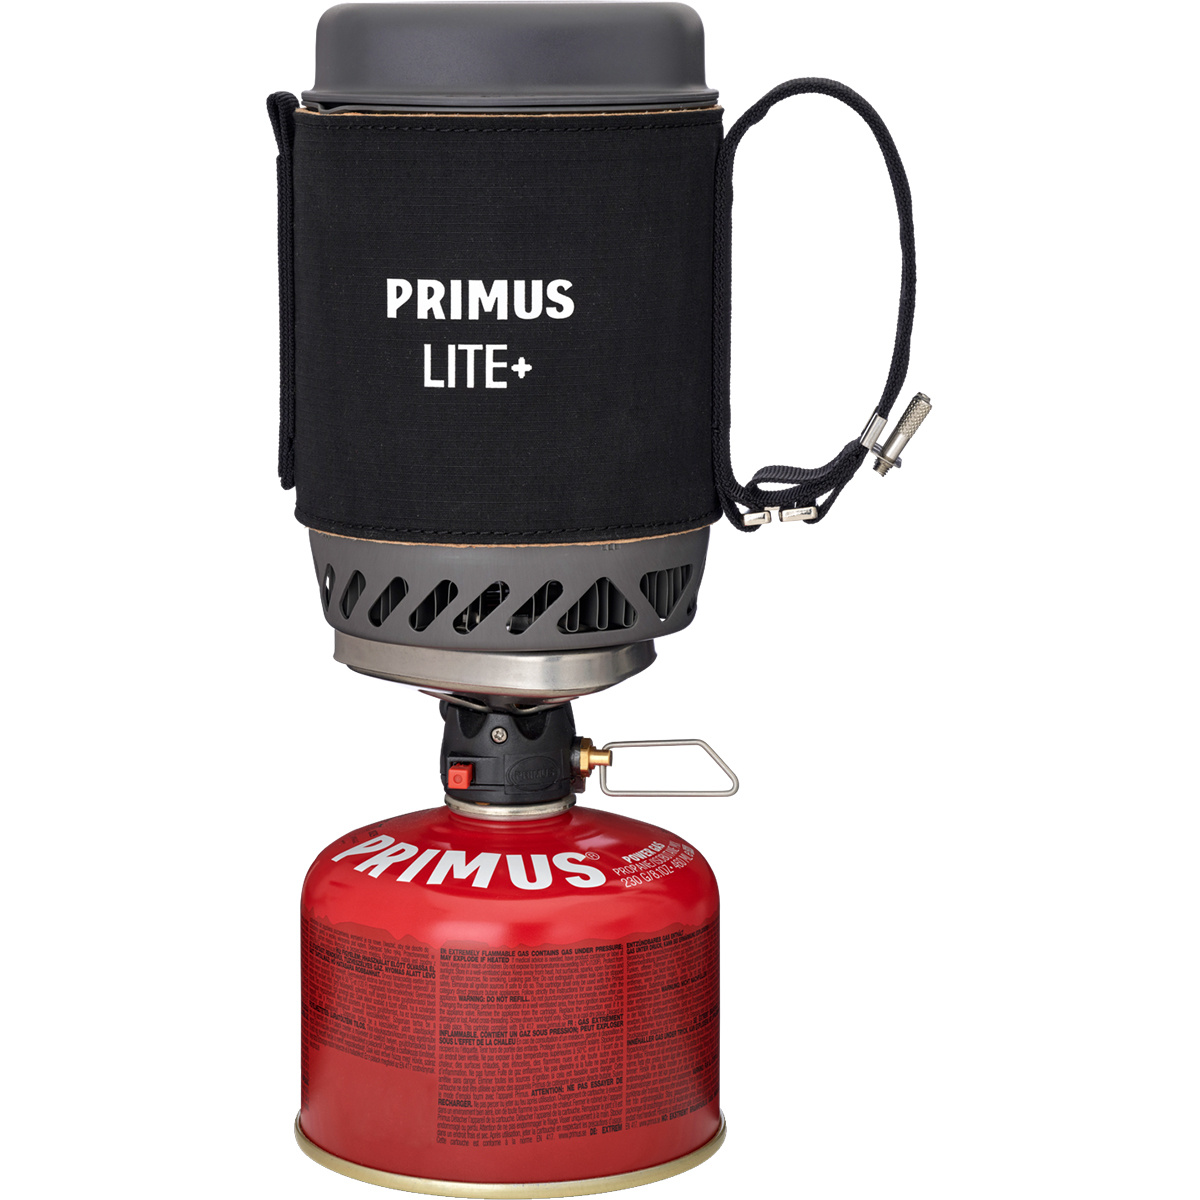 Image of Primus Fornello Lite Plus